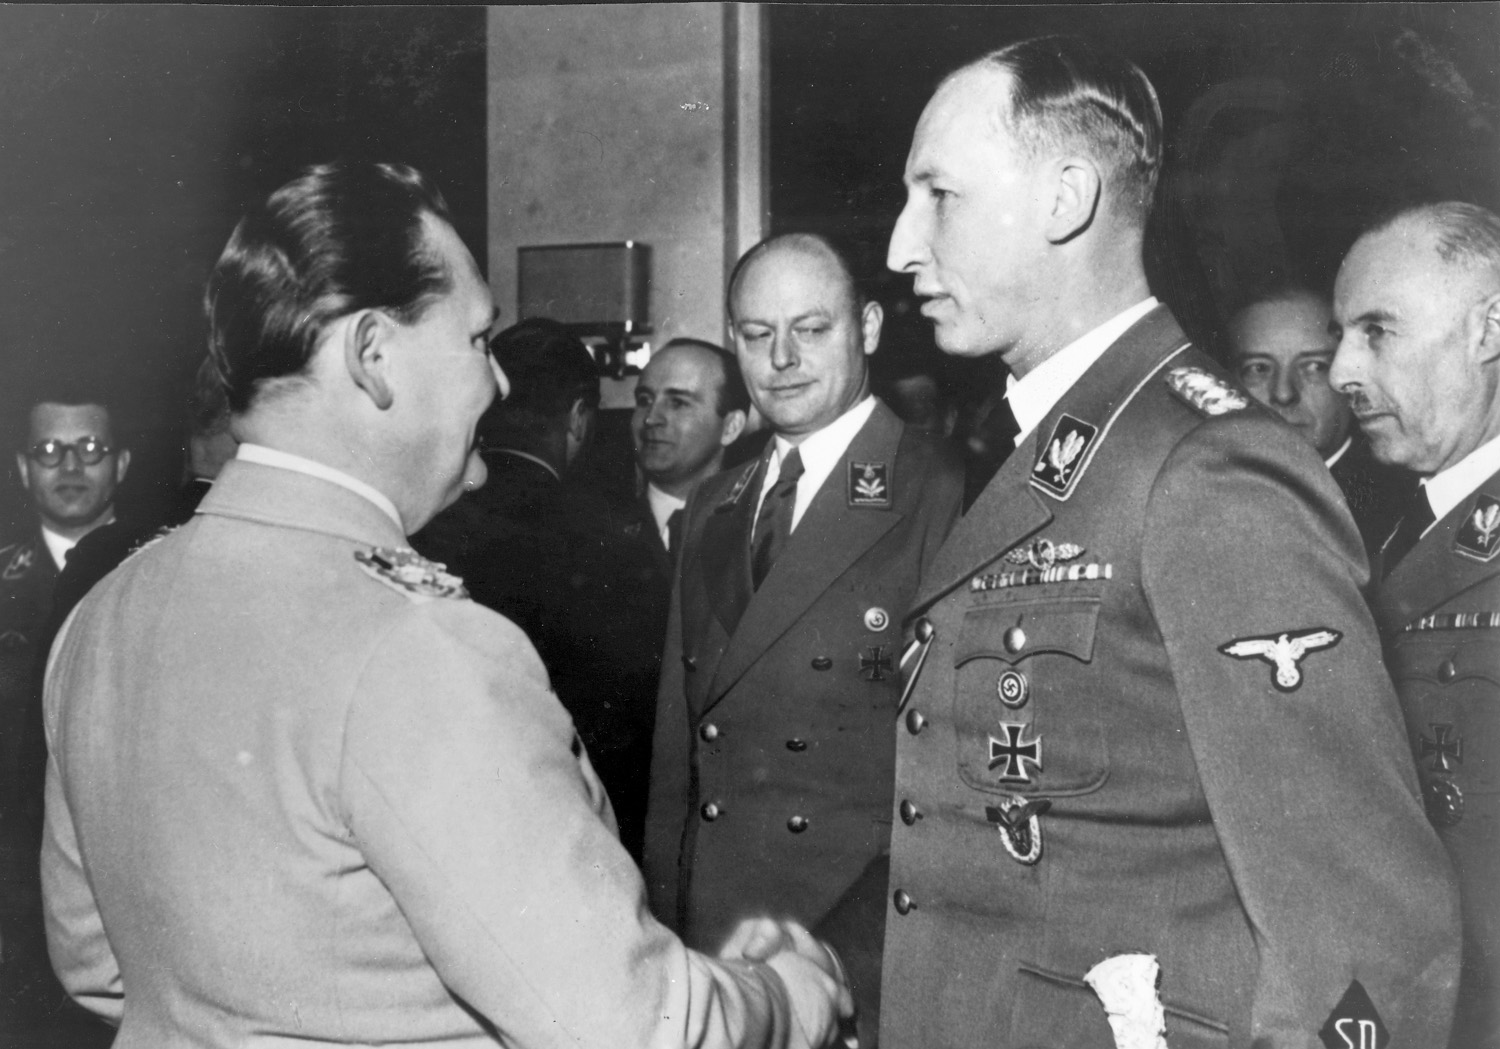 SS General Reinhard Heydrich greets Reichsmarshal Hermann Göring on the Luftwaffe chief’s birthday, January 12, 1941.